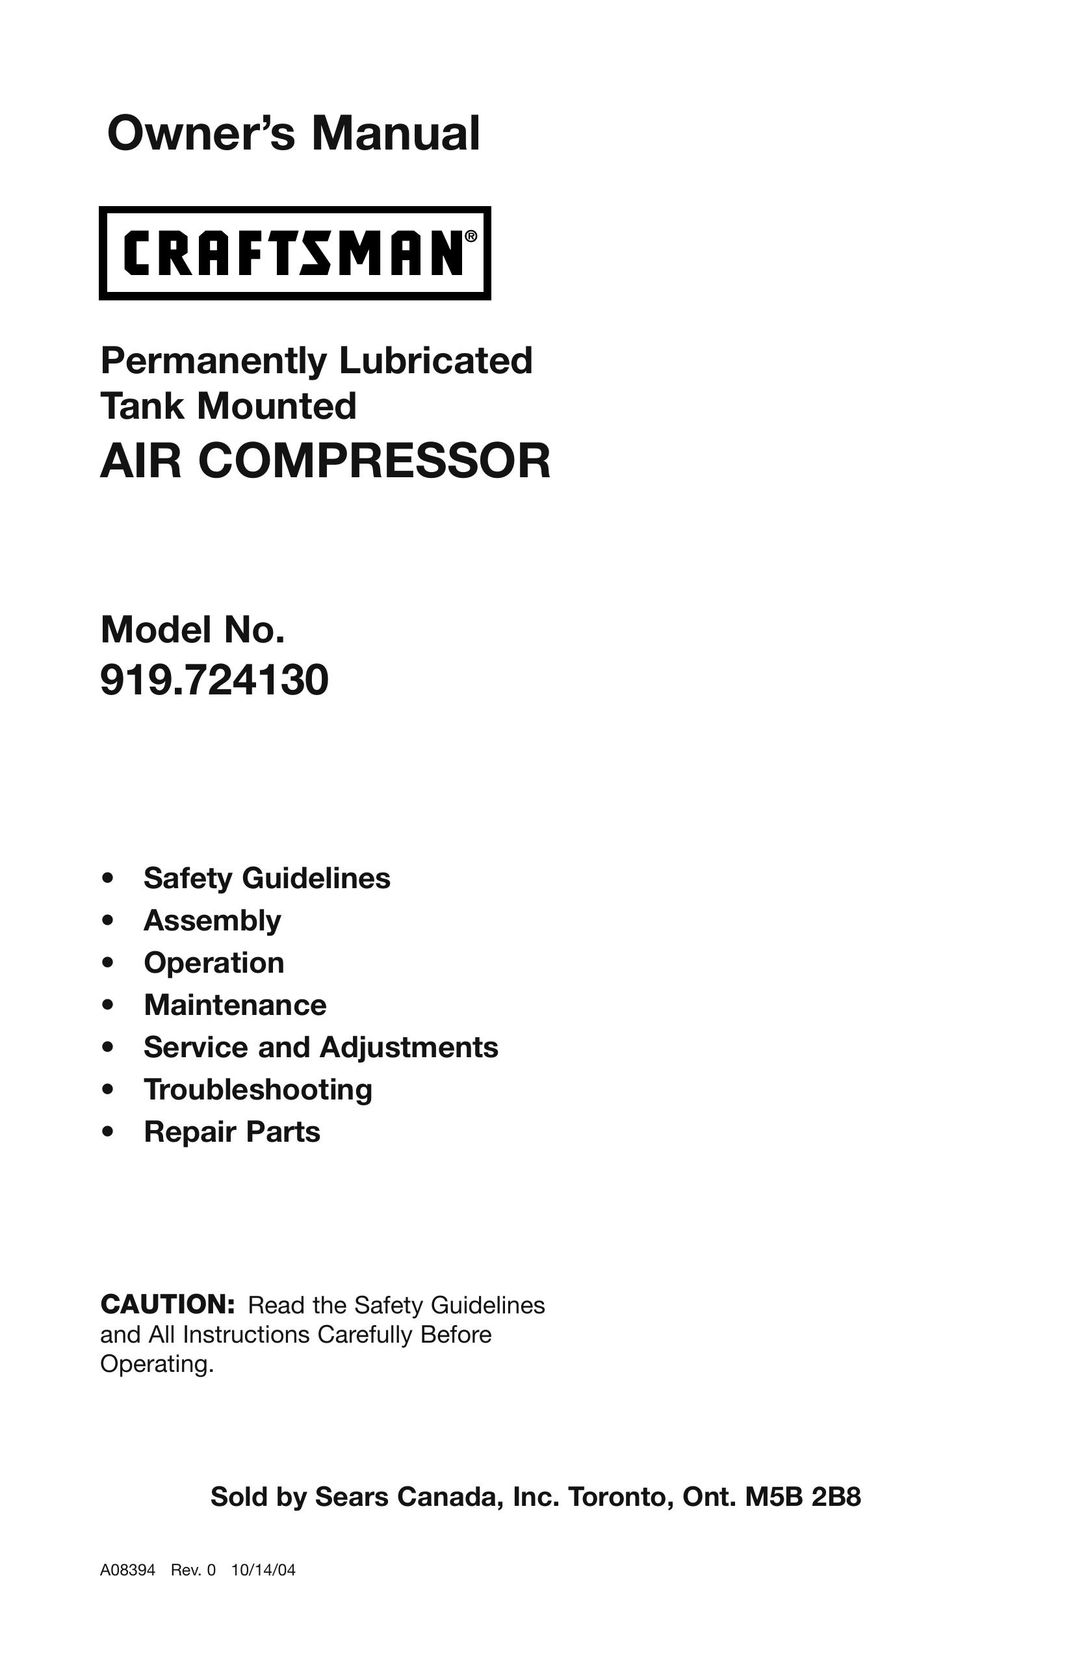 Craftsman 919.72413 Air Compressor User Manual